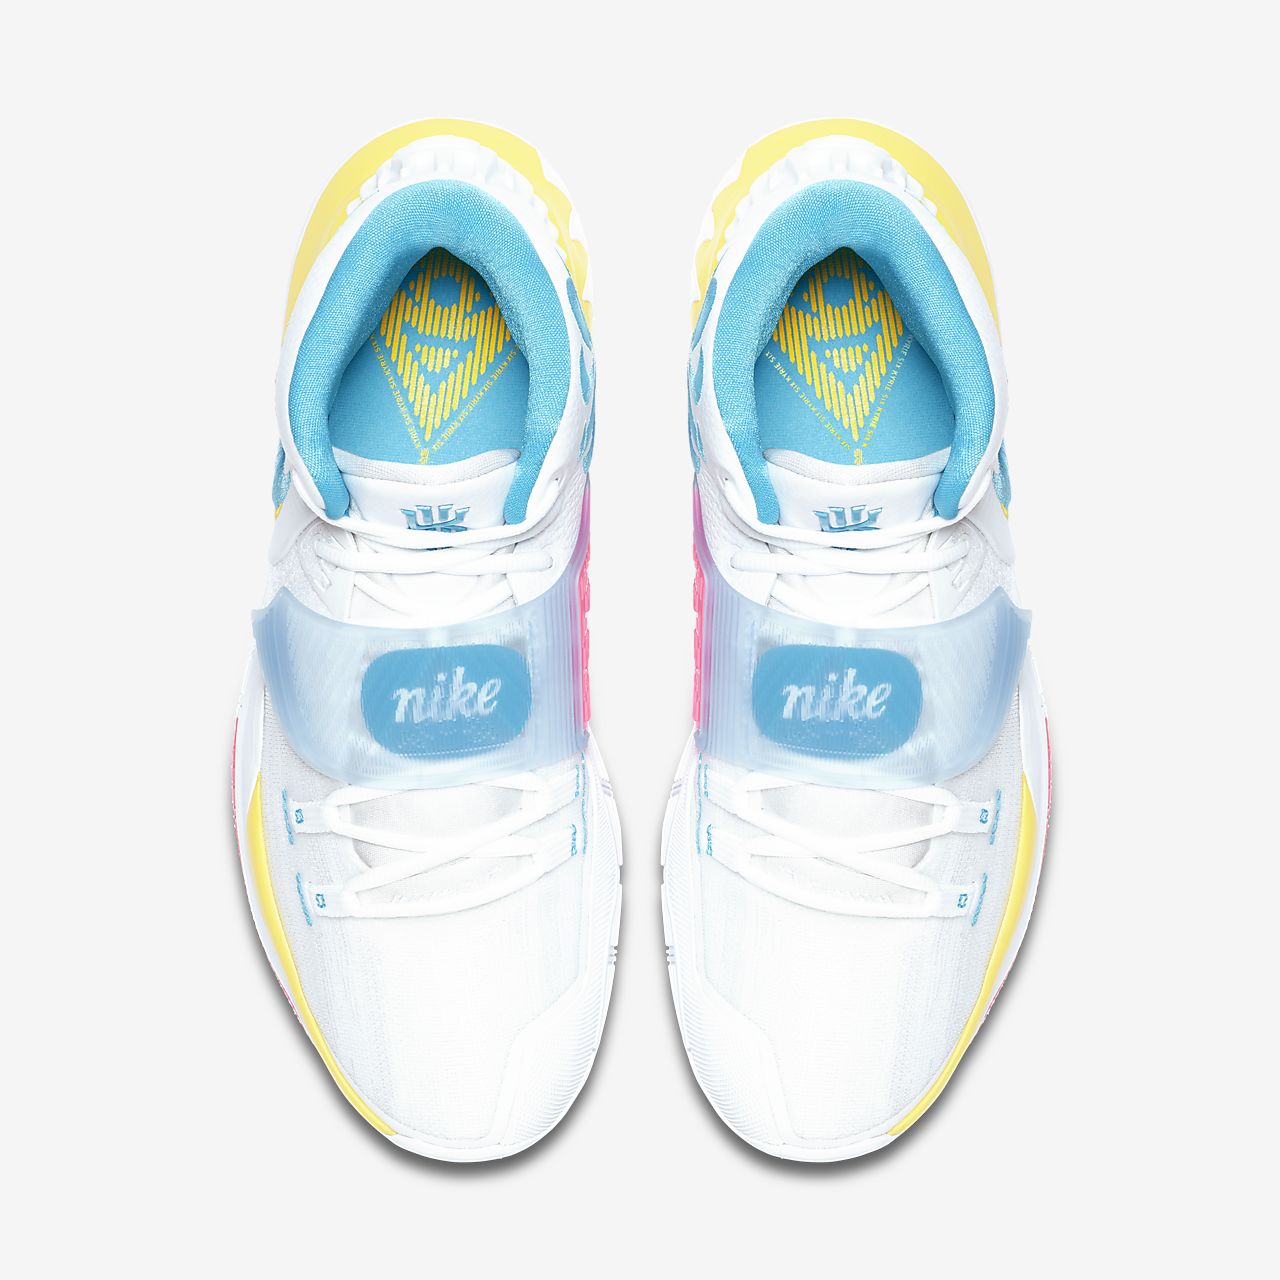 Nike Kyrie 6 AI CD5031 001 Release Date SneakerNews.com